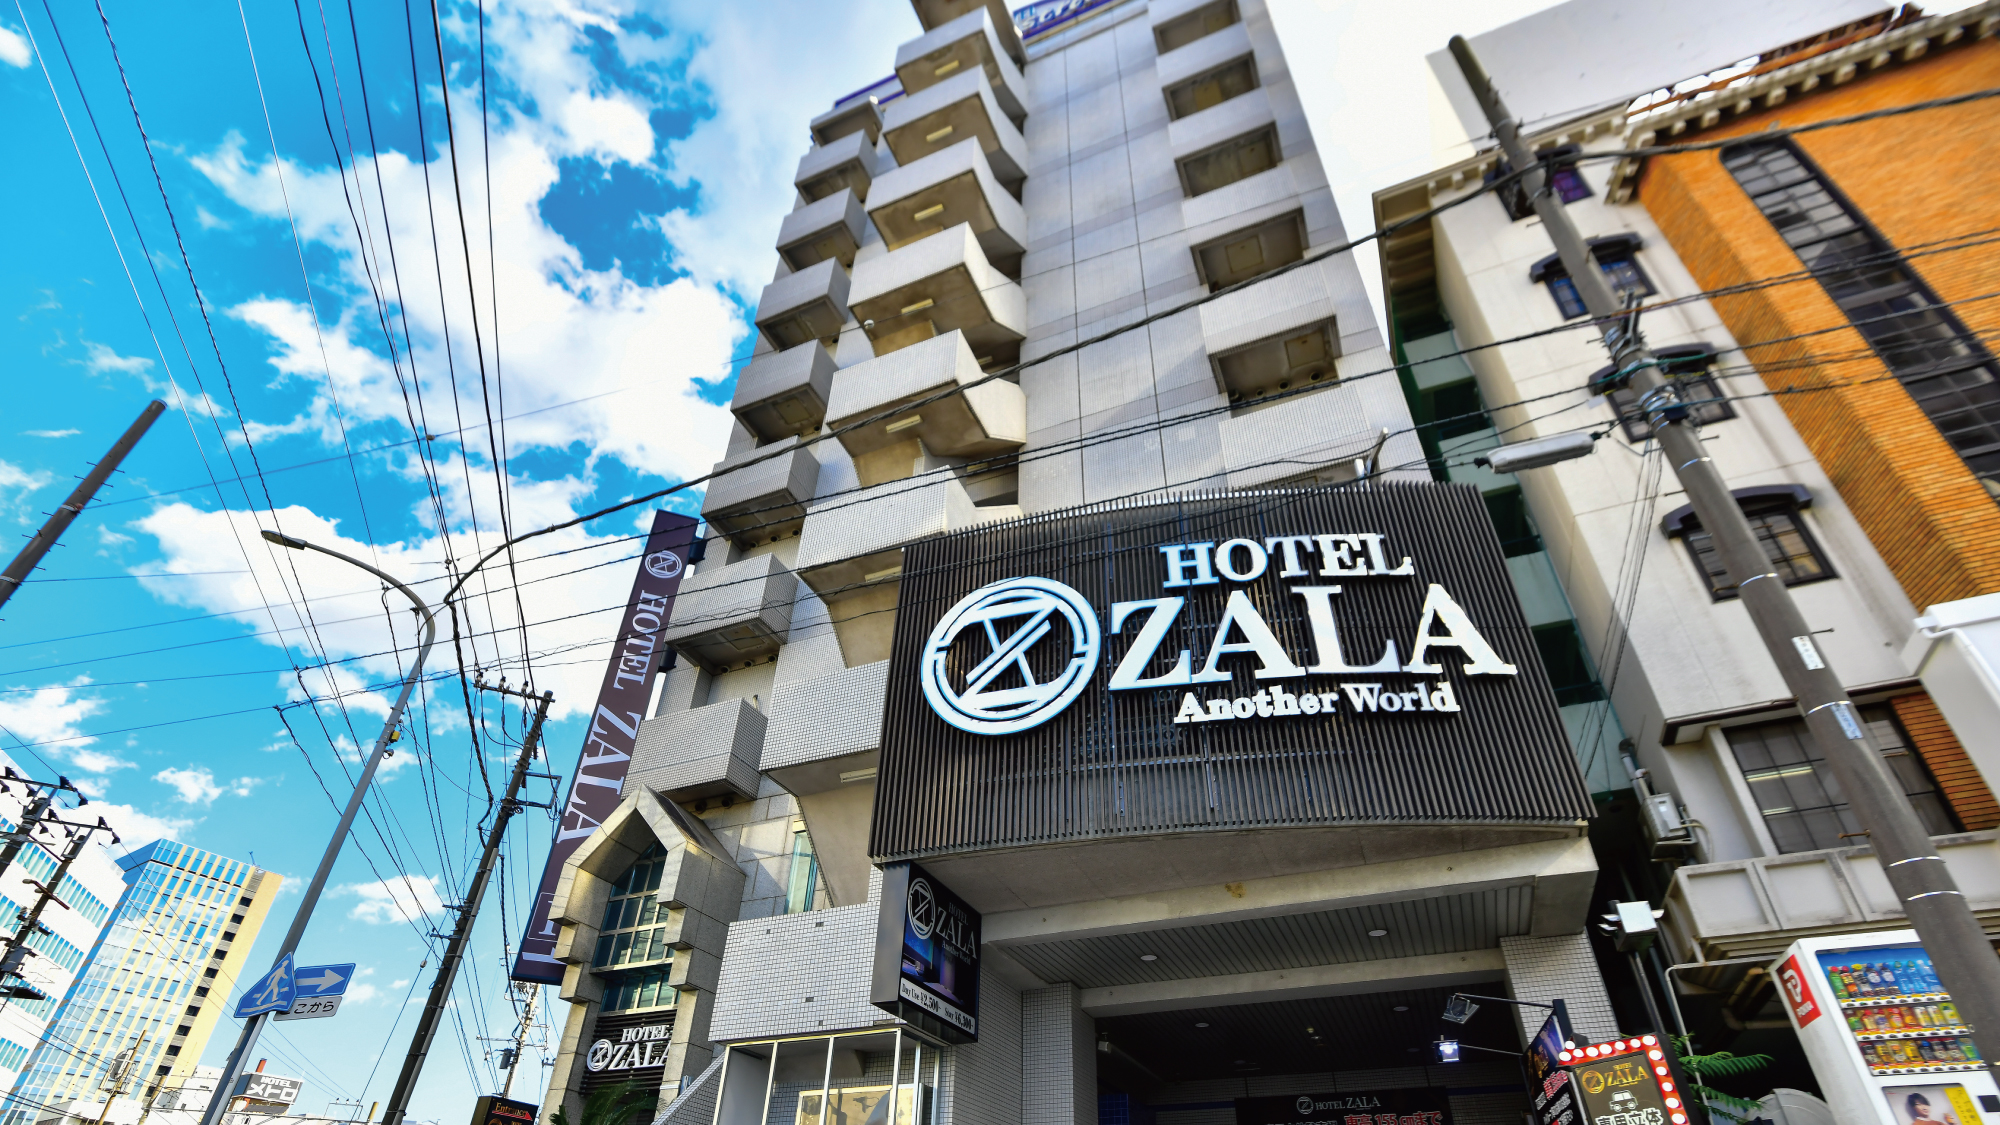 Hotel ZALA image